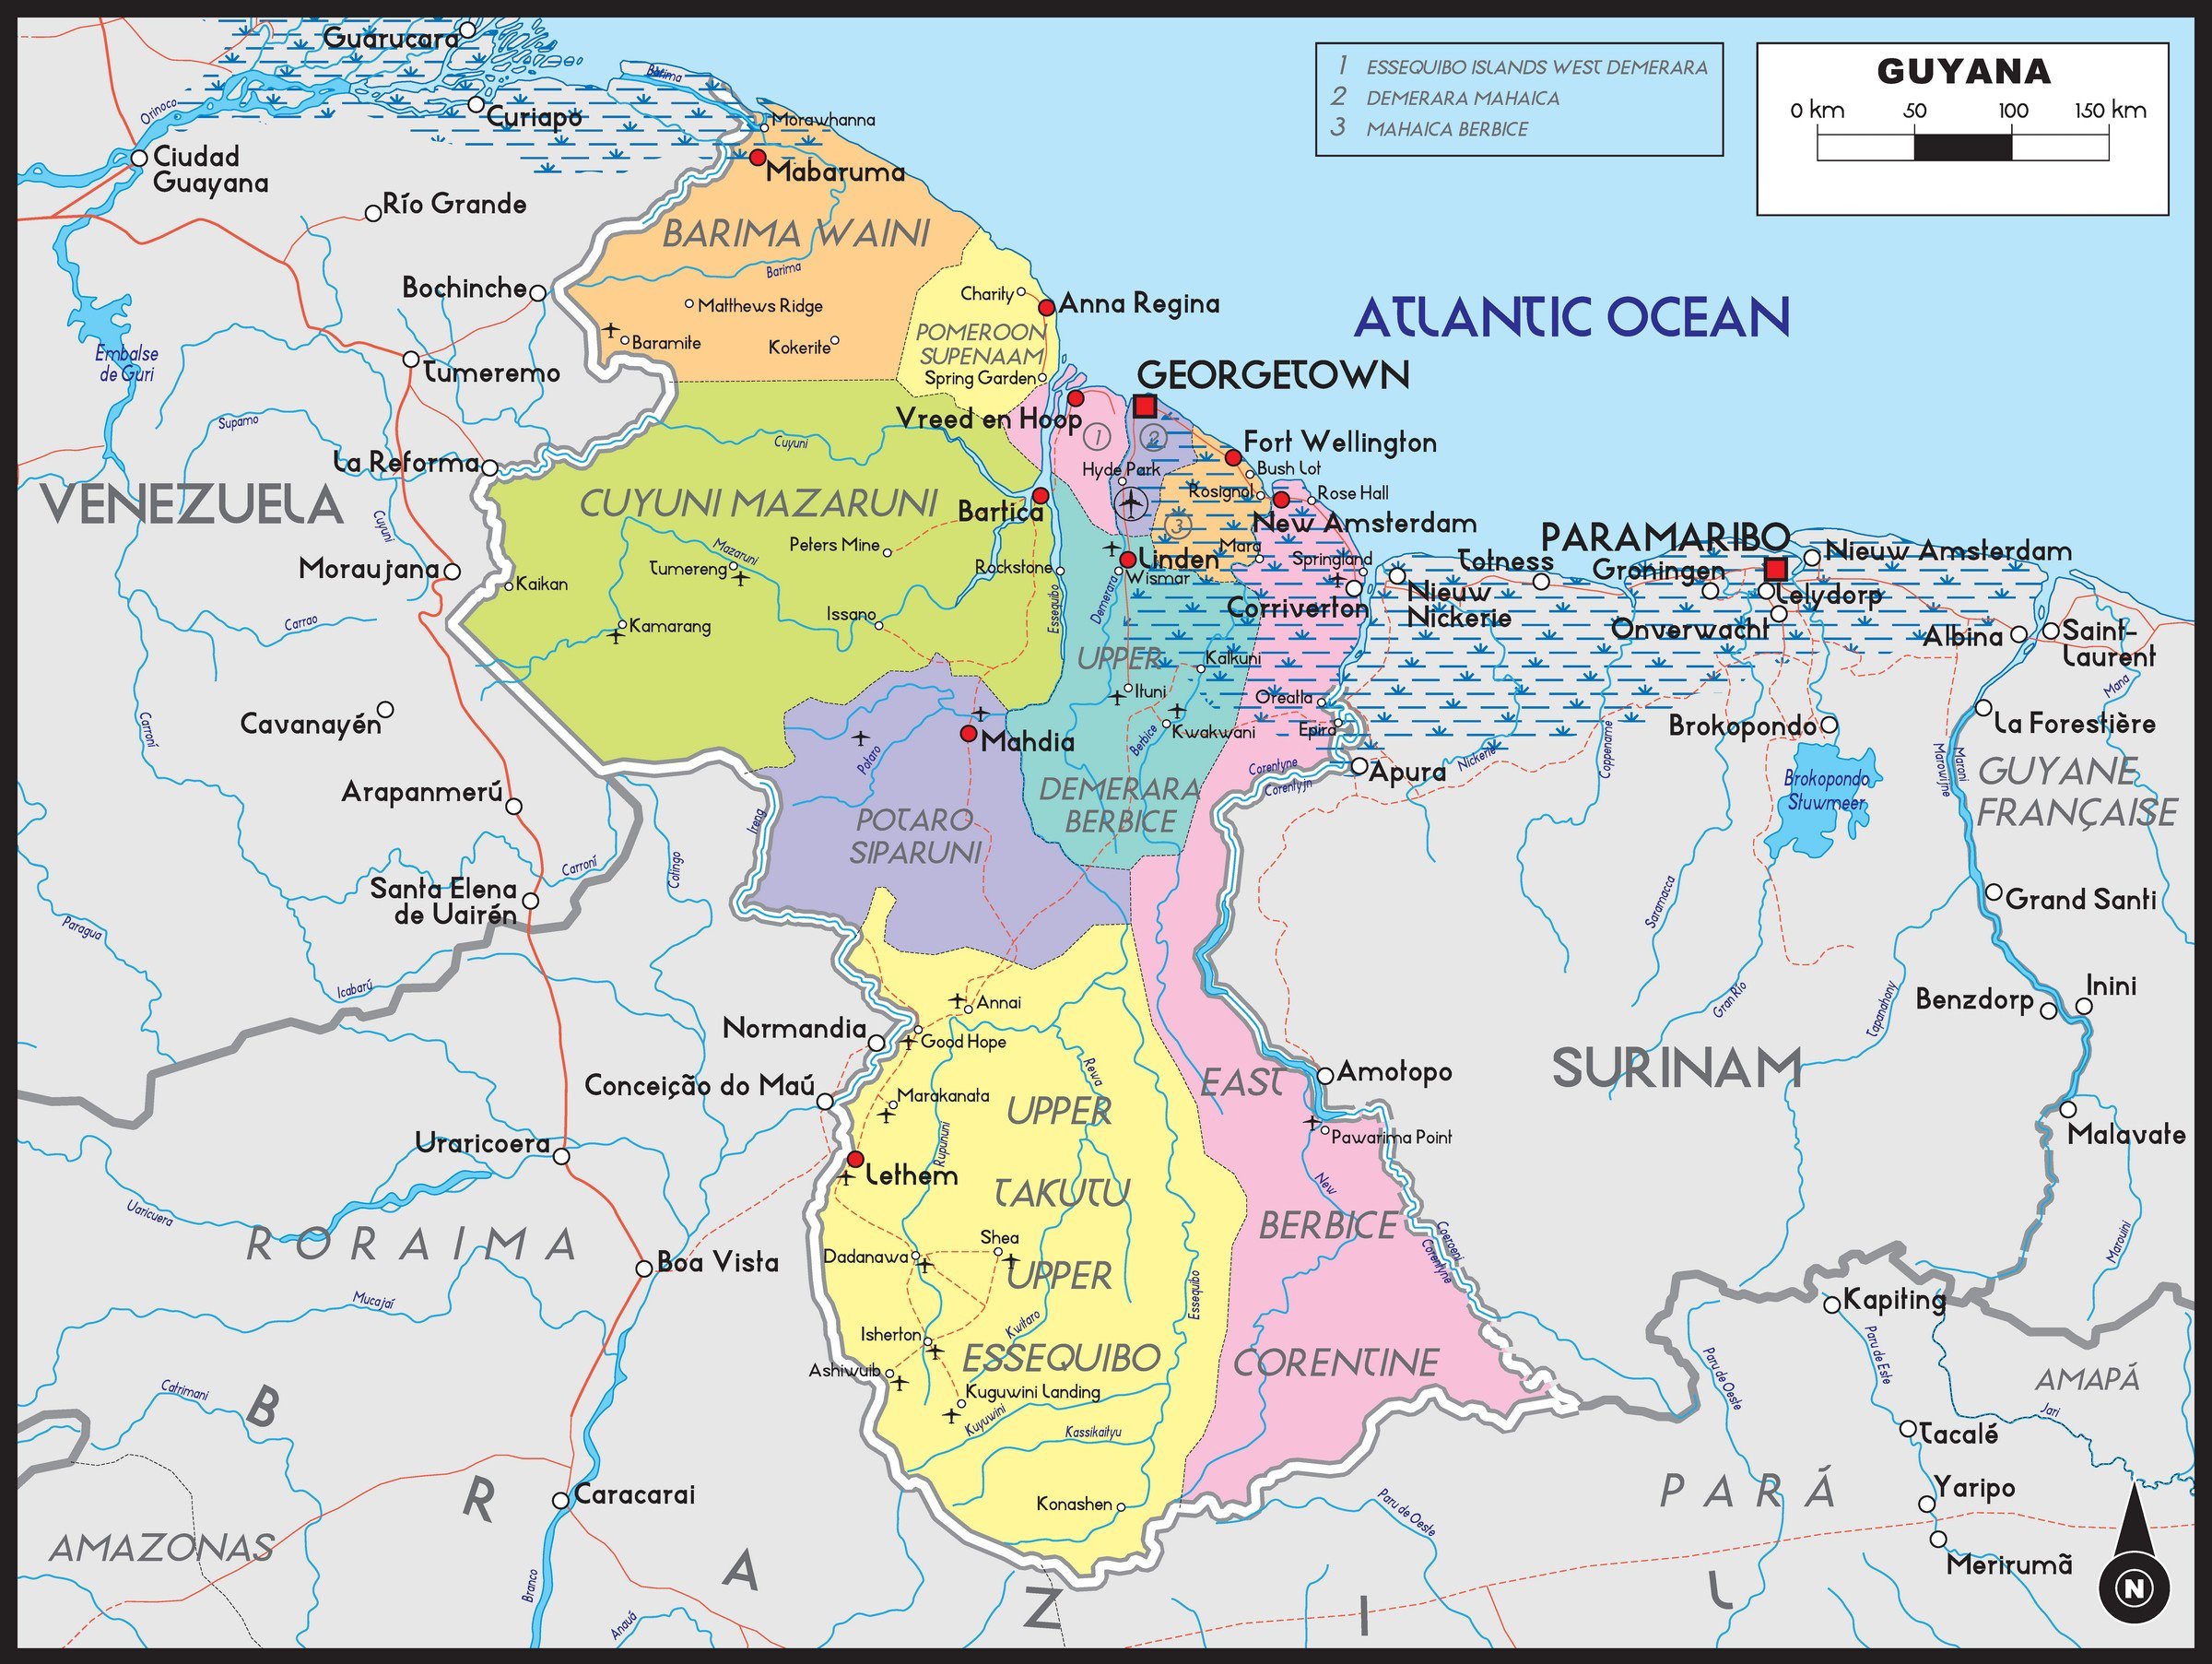 Pic Of Guyana Map